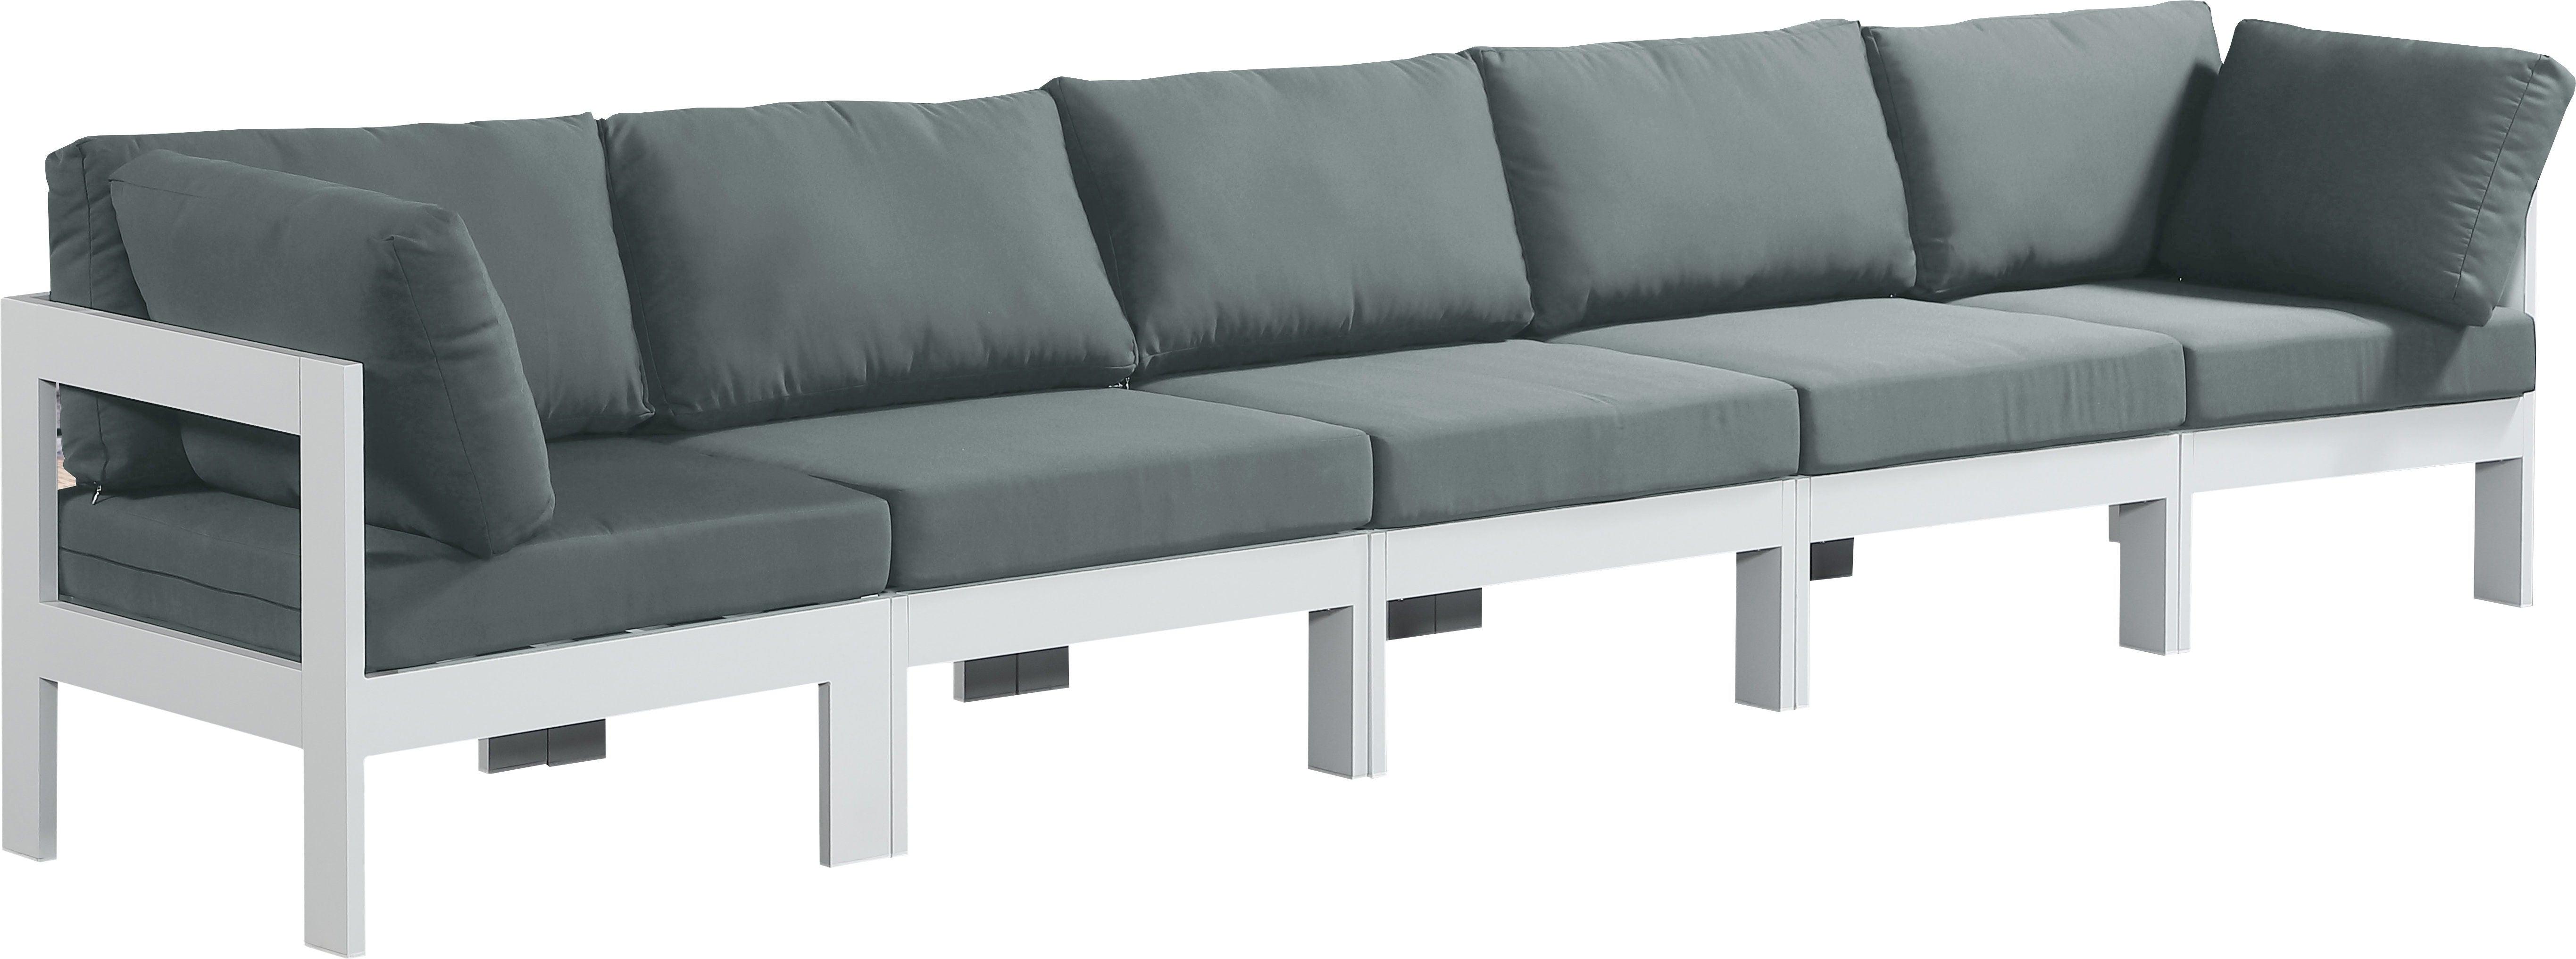 Meridian Furniture - Nizuc - Outdoor Patio Modular Sofa 5 Seats - Grey - Fabric - 5th Avenue Furniture